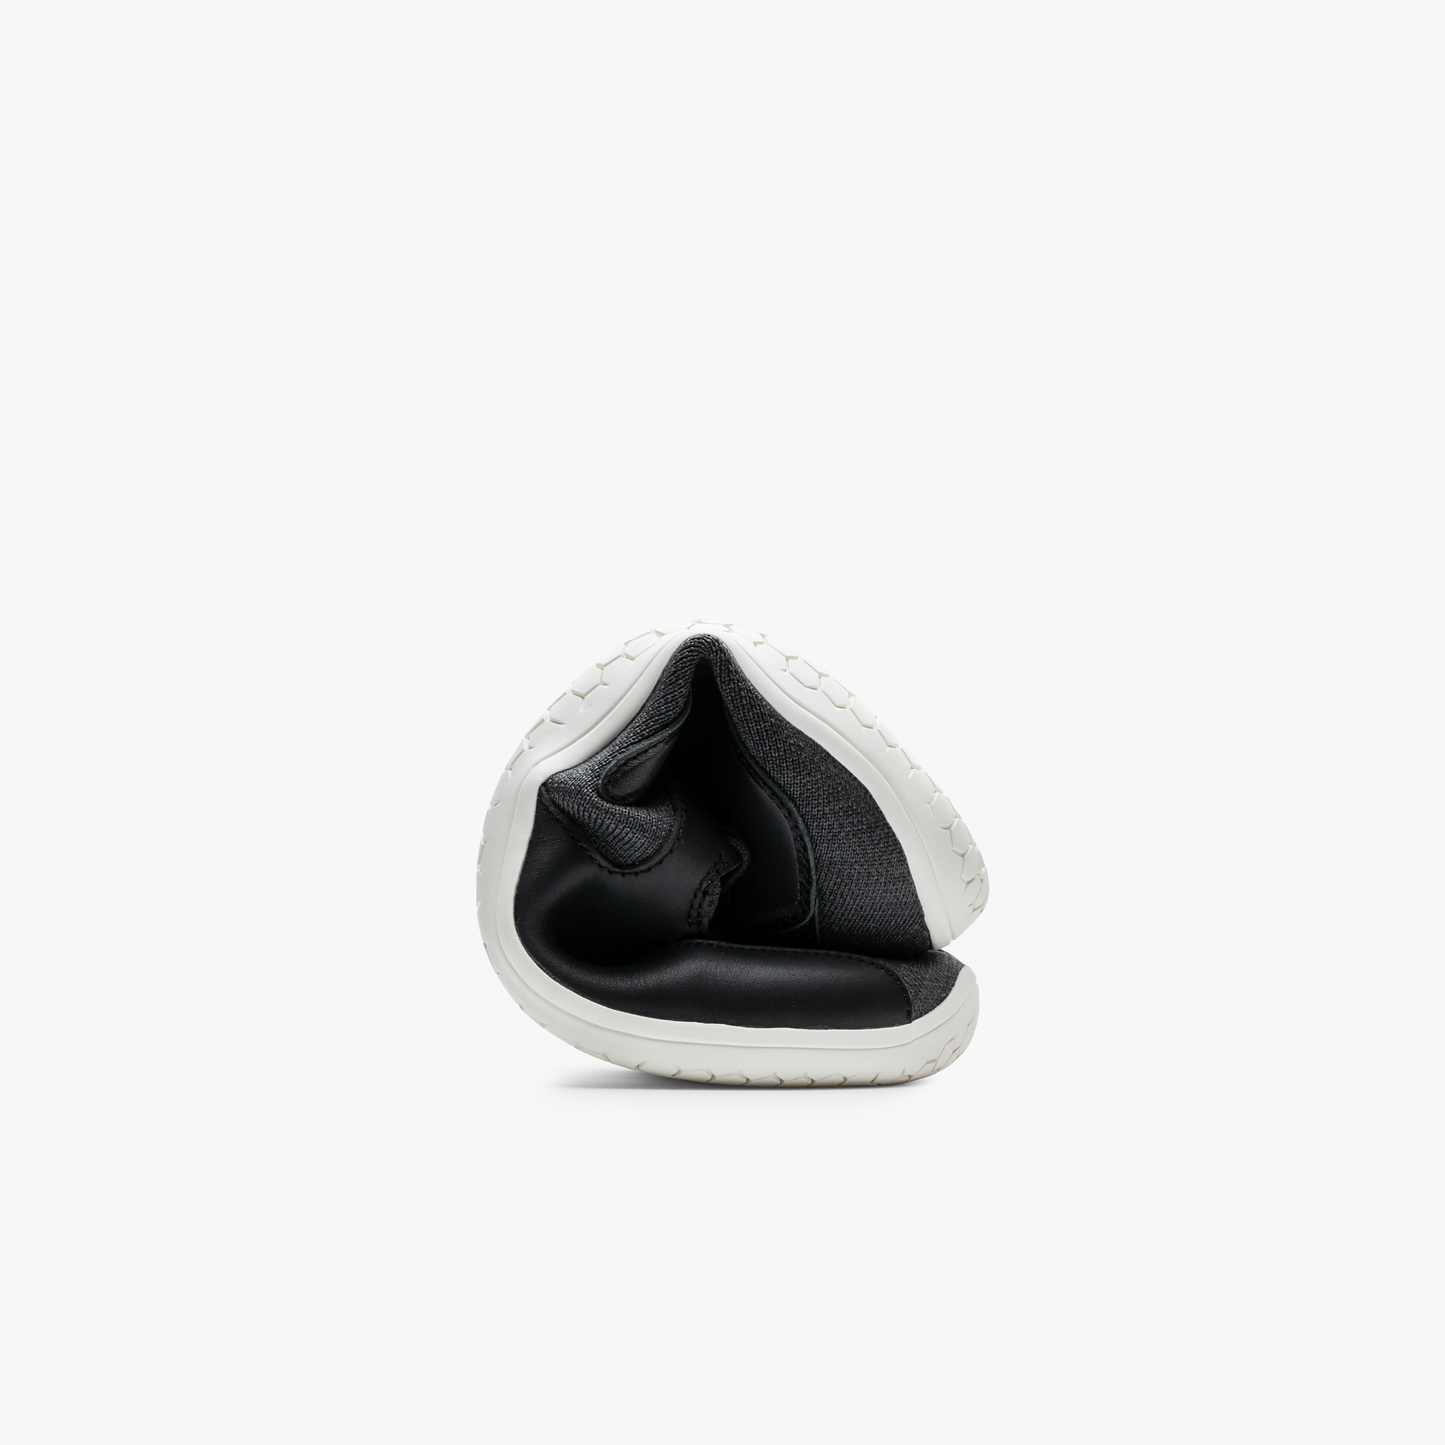 Sammenfoldet Vivobarefoot Asana III sko i varianten Obsidian viser fleksibiliteten og lette design, ideel til rejser og daglig komfort.